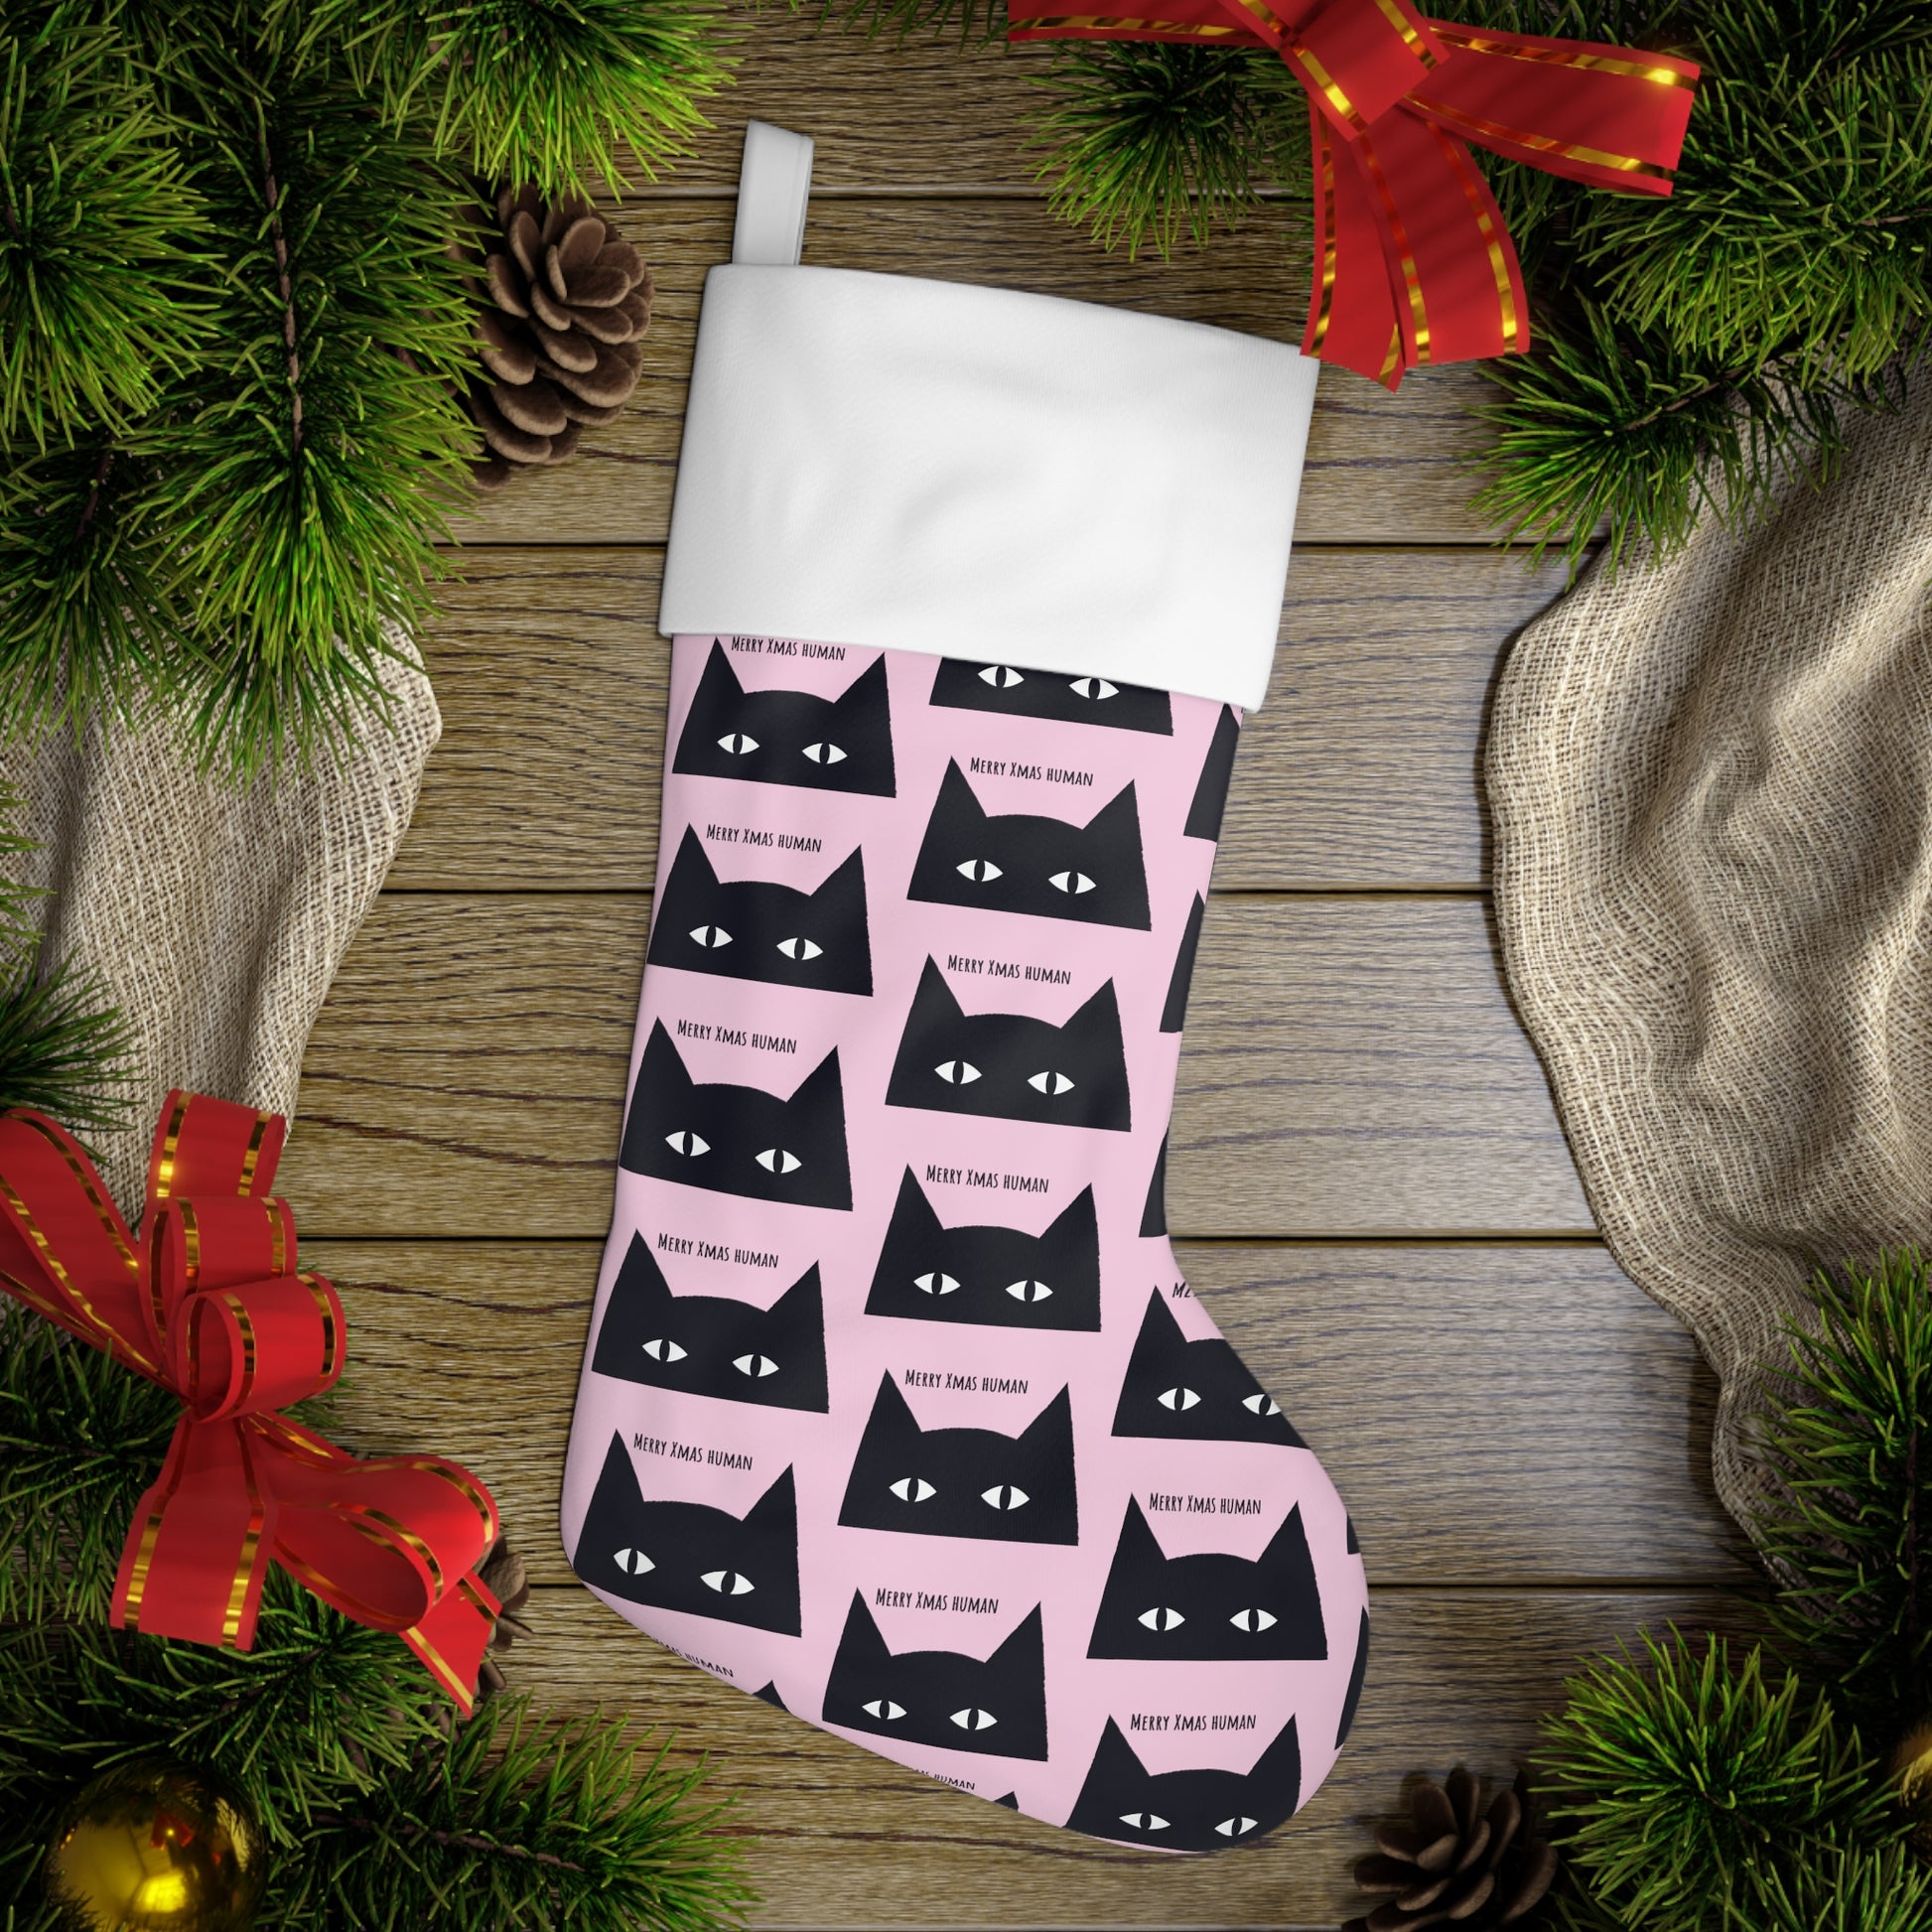 Black cat says "Merry Xmas Human" pattern Holiday Stocking, Christmas Holiday Stocking, black cat Xmas Holiday Stocking, Black cat gift